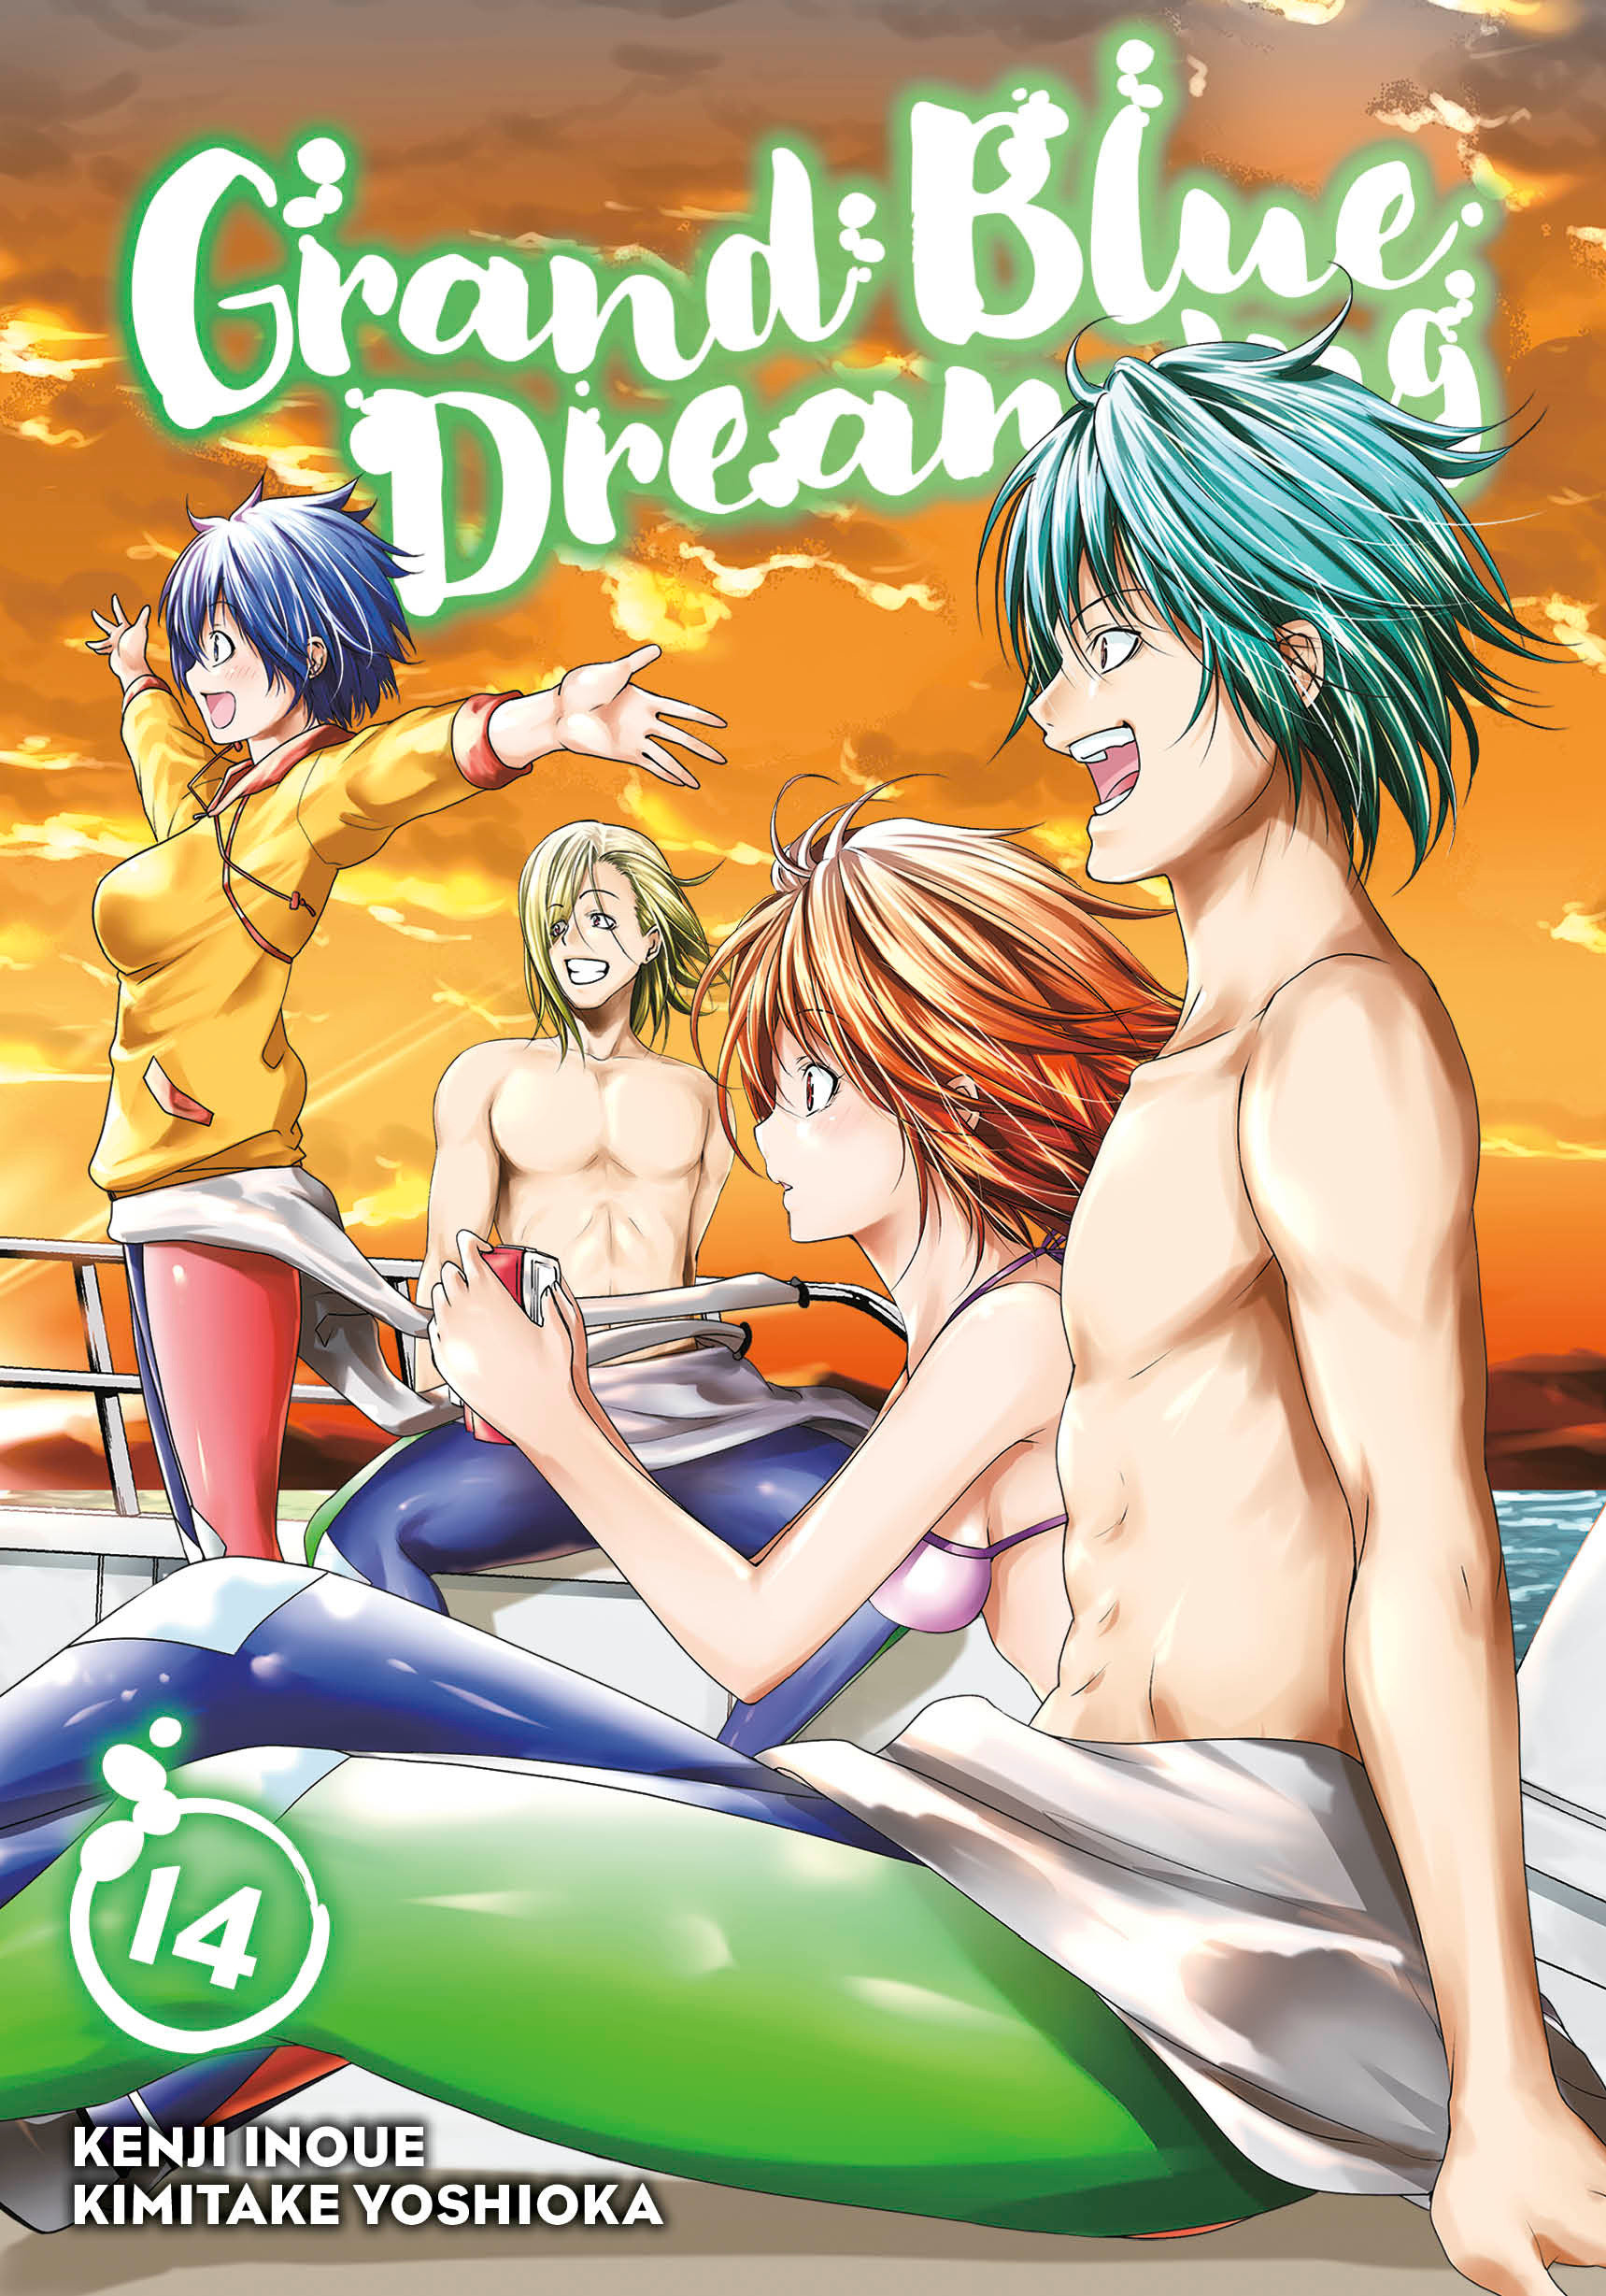 Grand Blue Dreaming Manga Volume 14 (Mature)